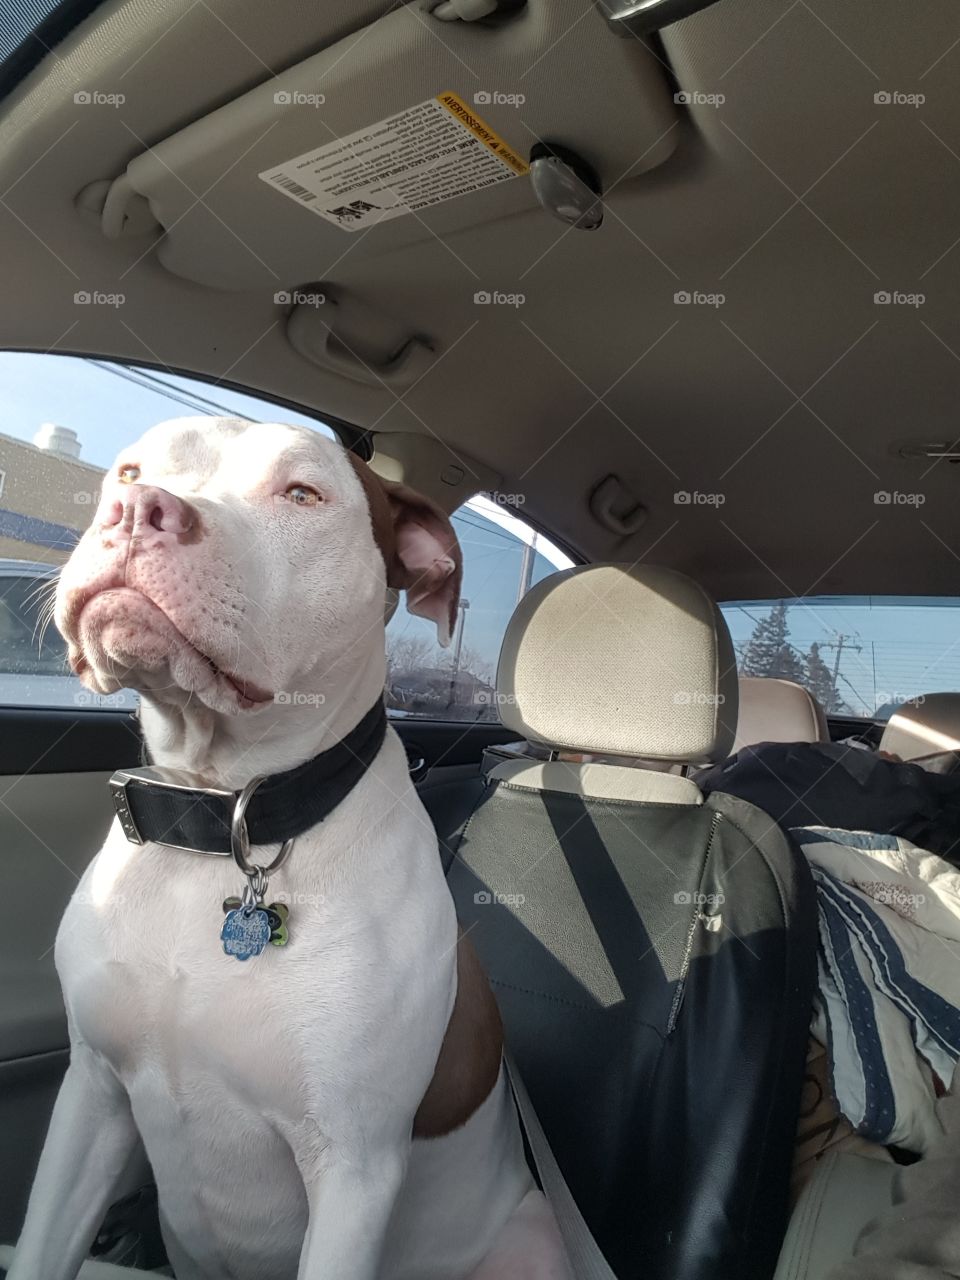 pittbull sitting shotgun in a car